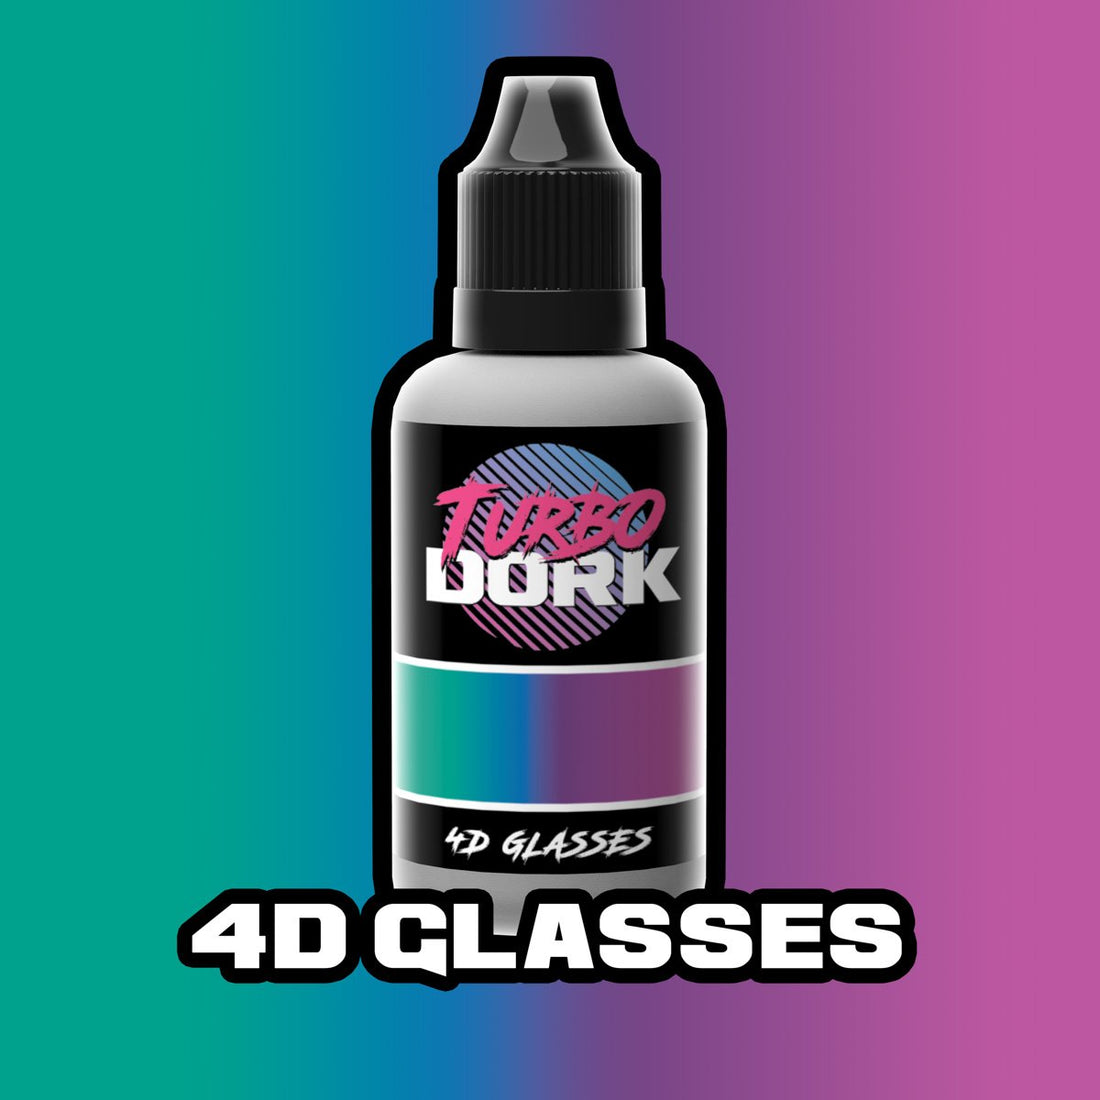 Turbodork Paint: 4D Glasses Turboshift